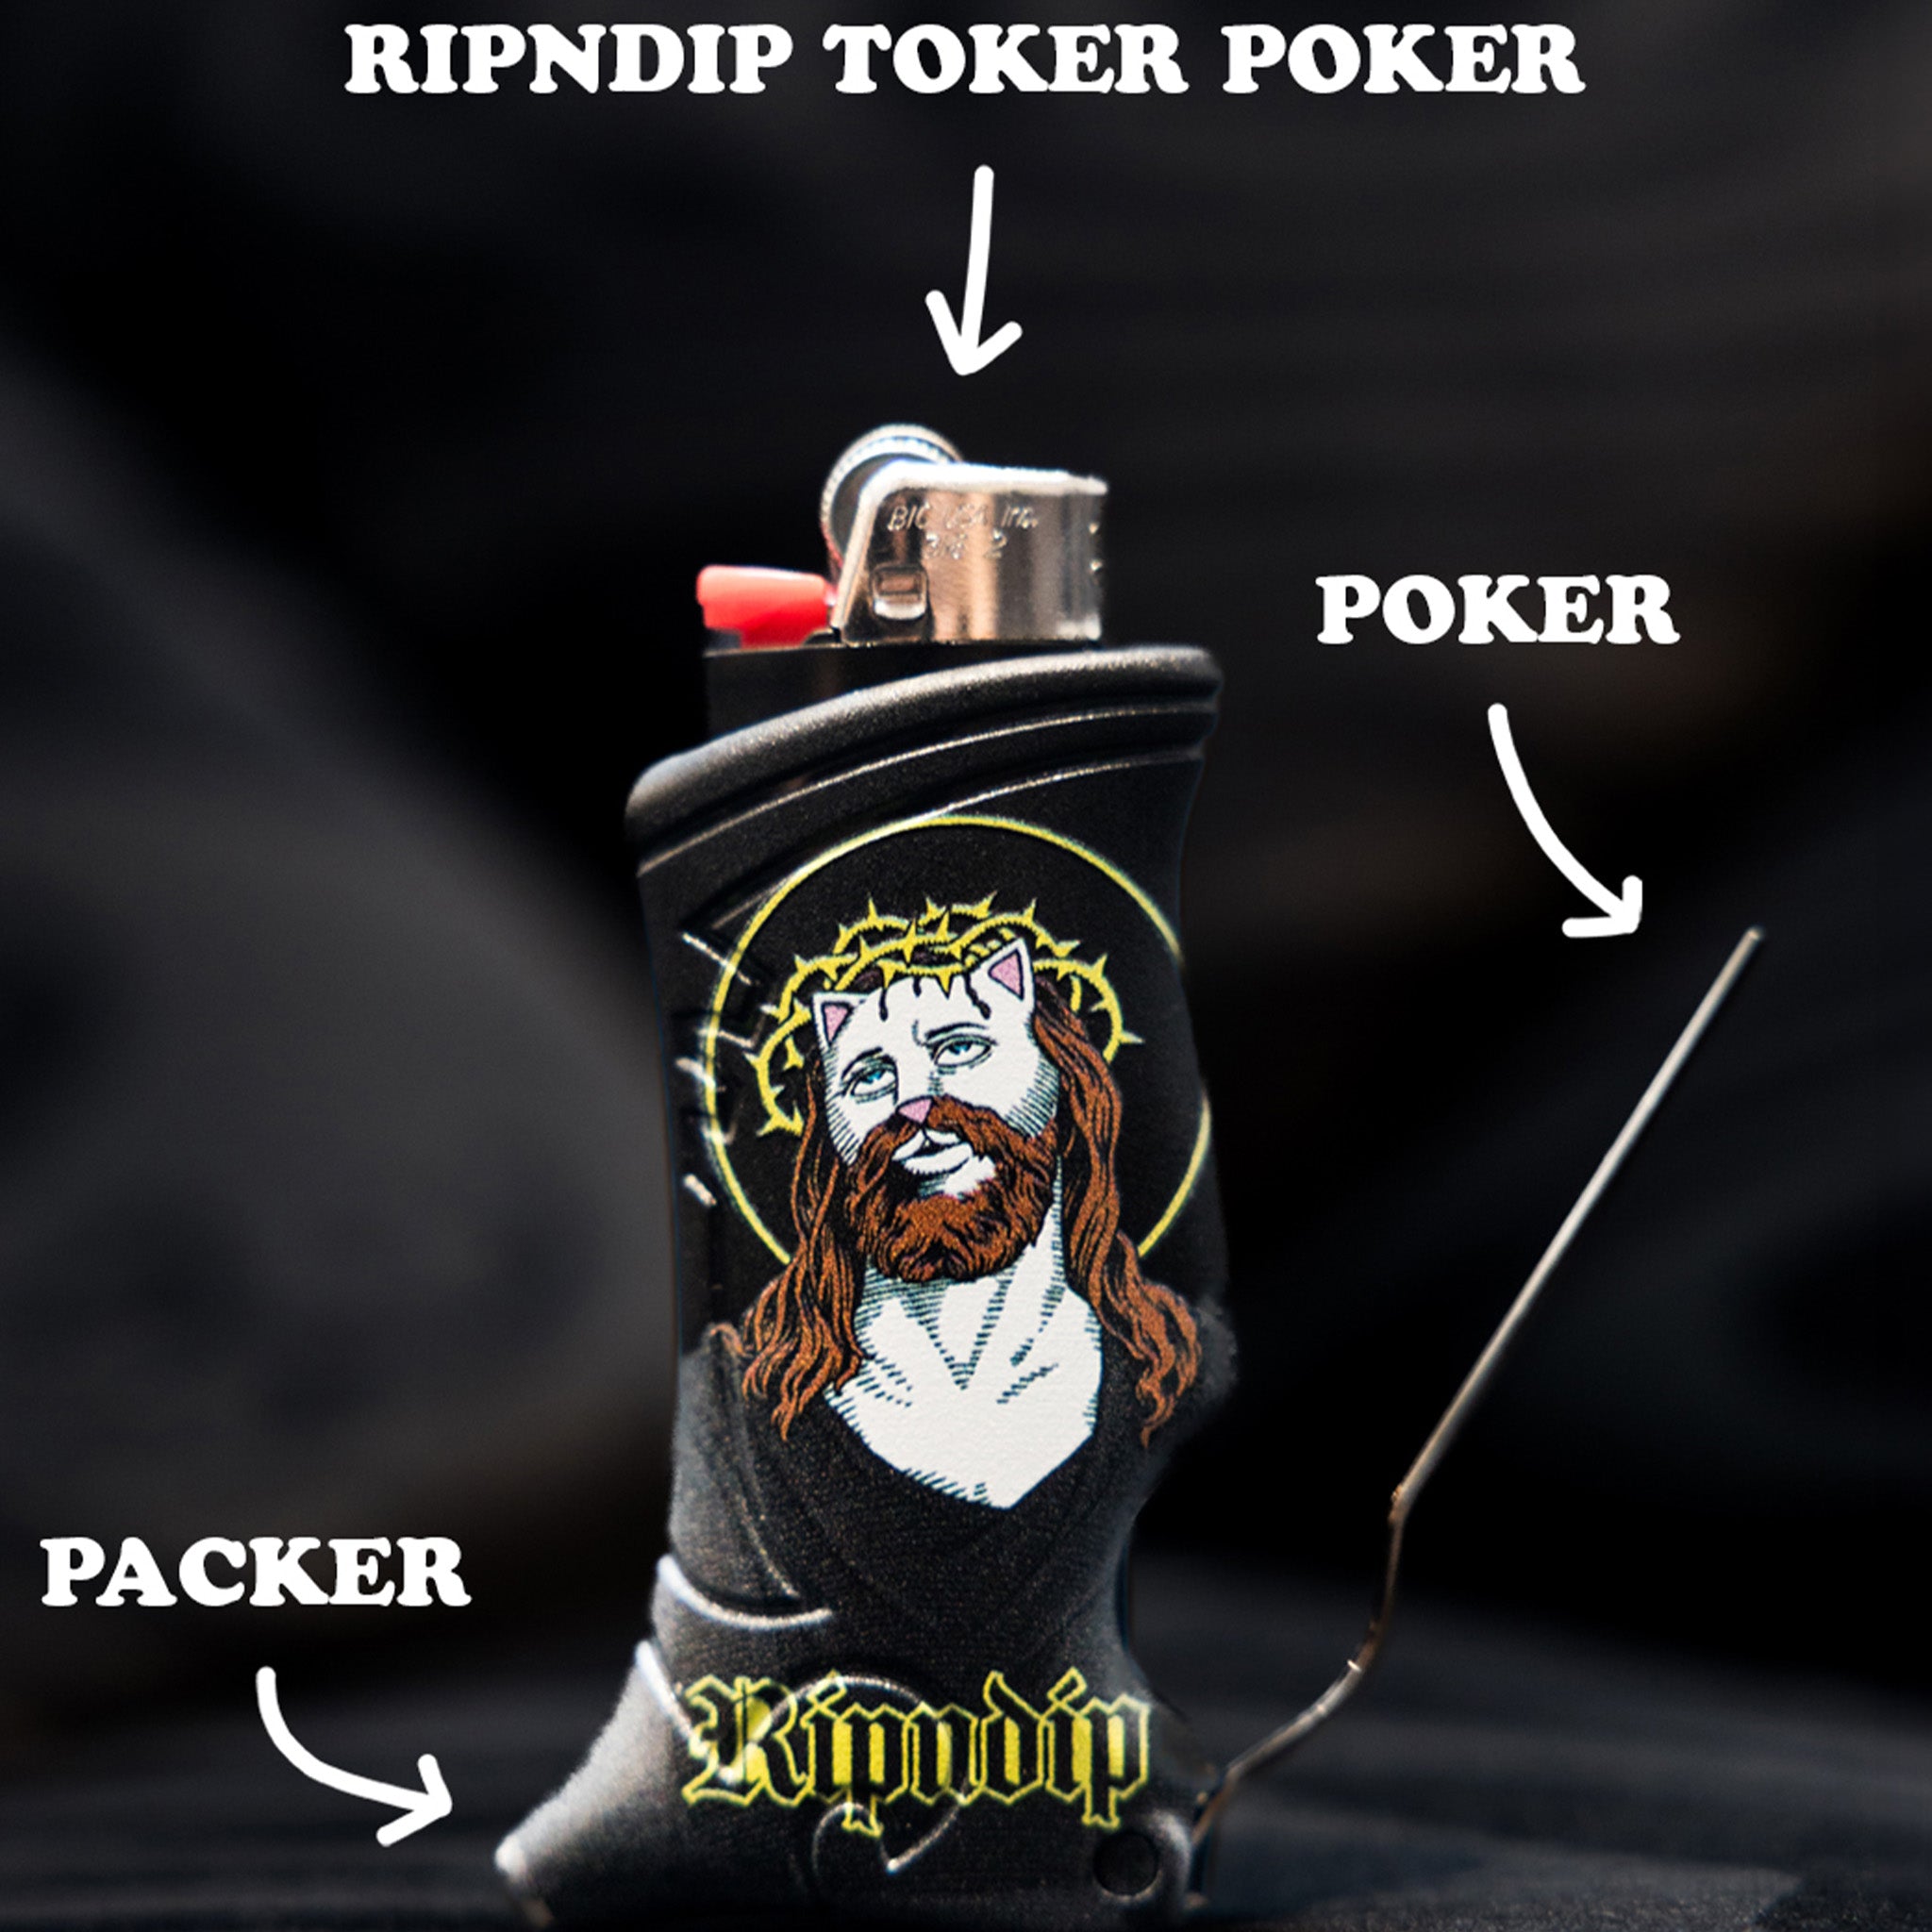 RIPNDIP Lord Savior Toker Poker